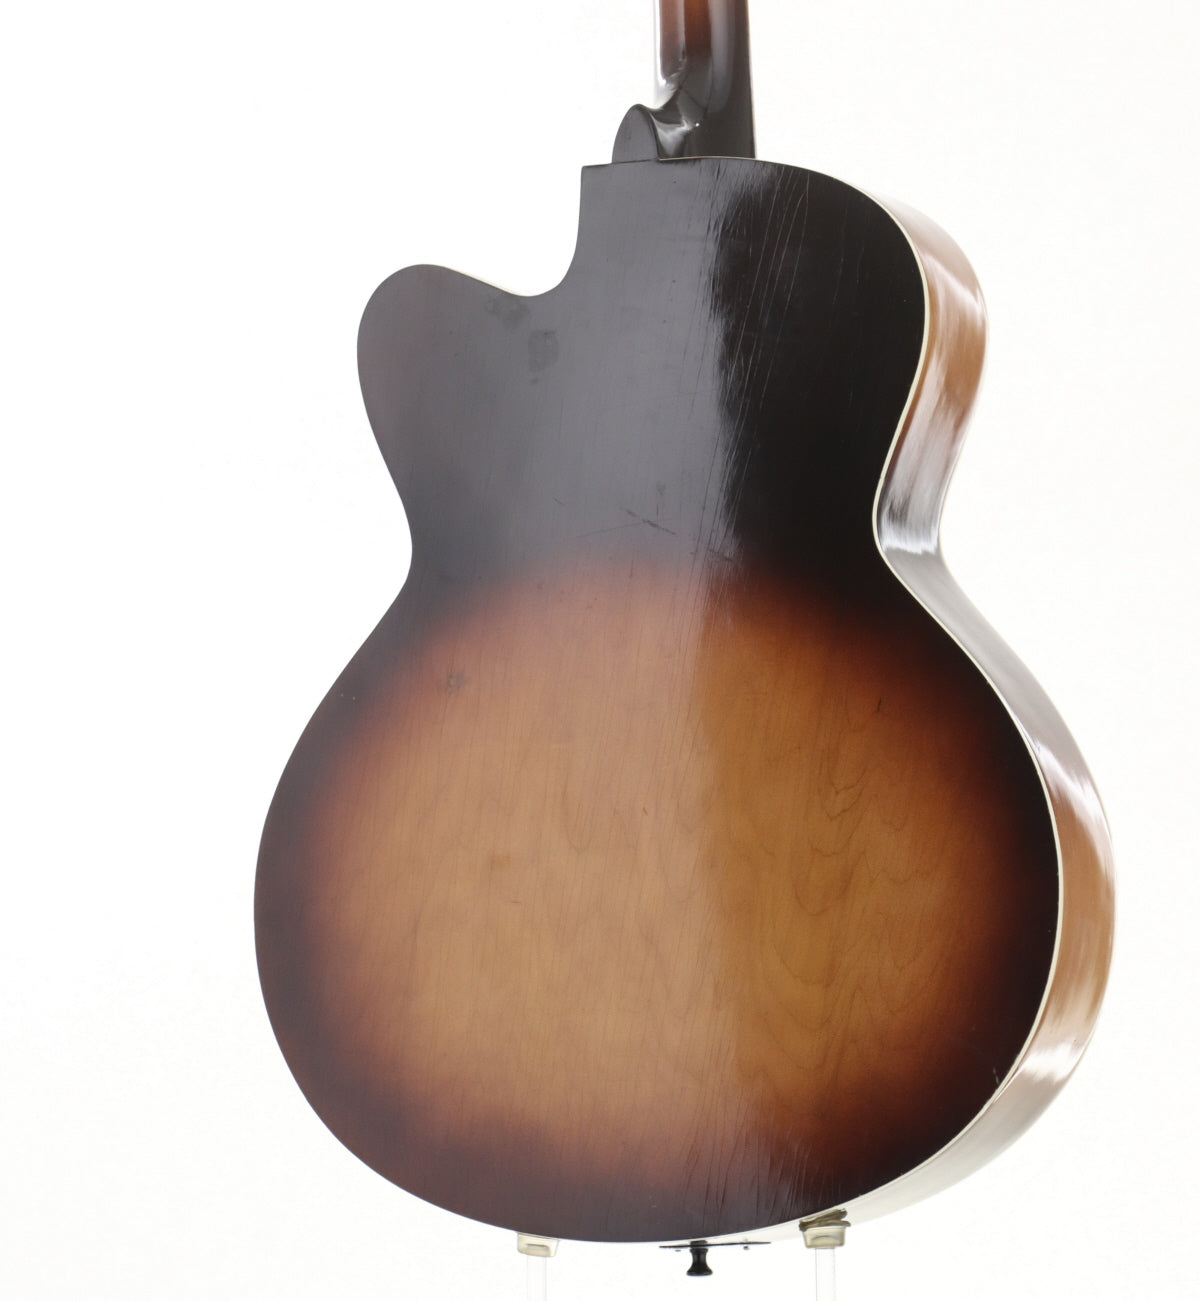 USED Teisco / Model13 [2.56kg] Tesco full acoustic electric guitar [08]